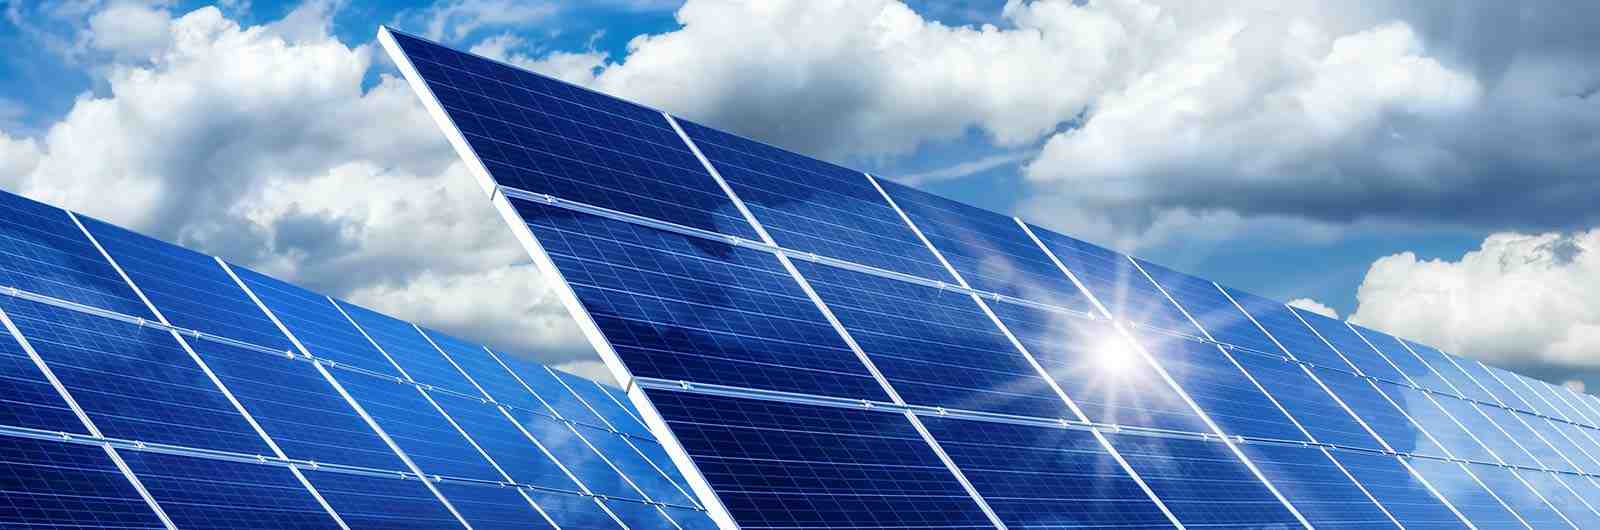 Are free solar panels really free?